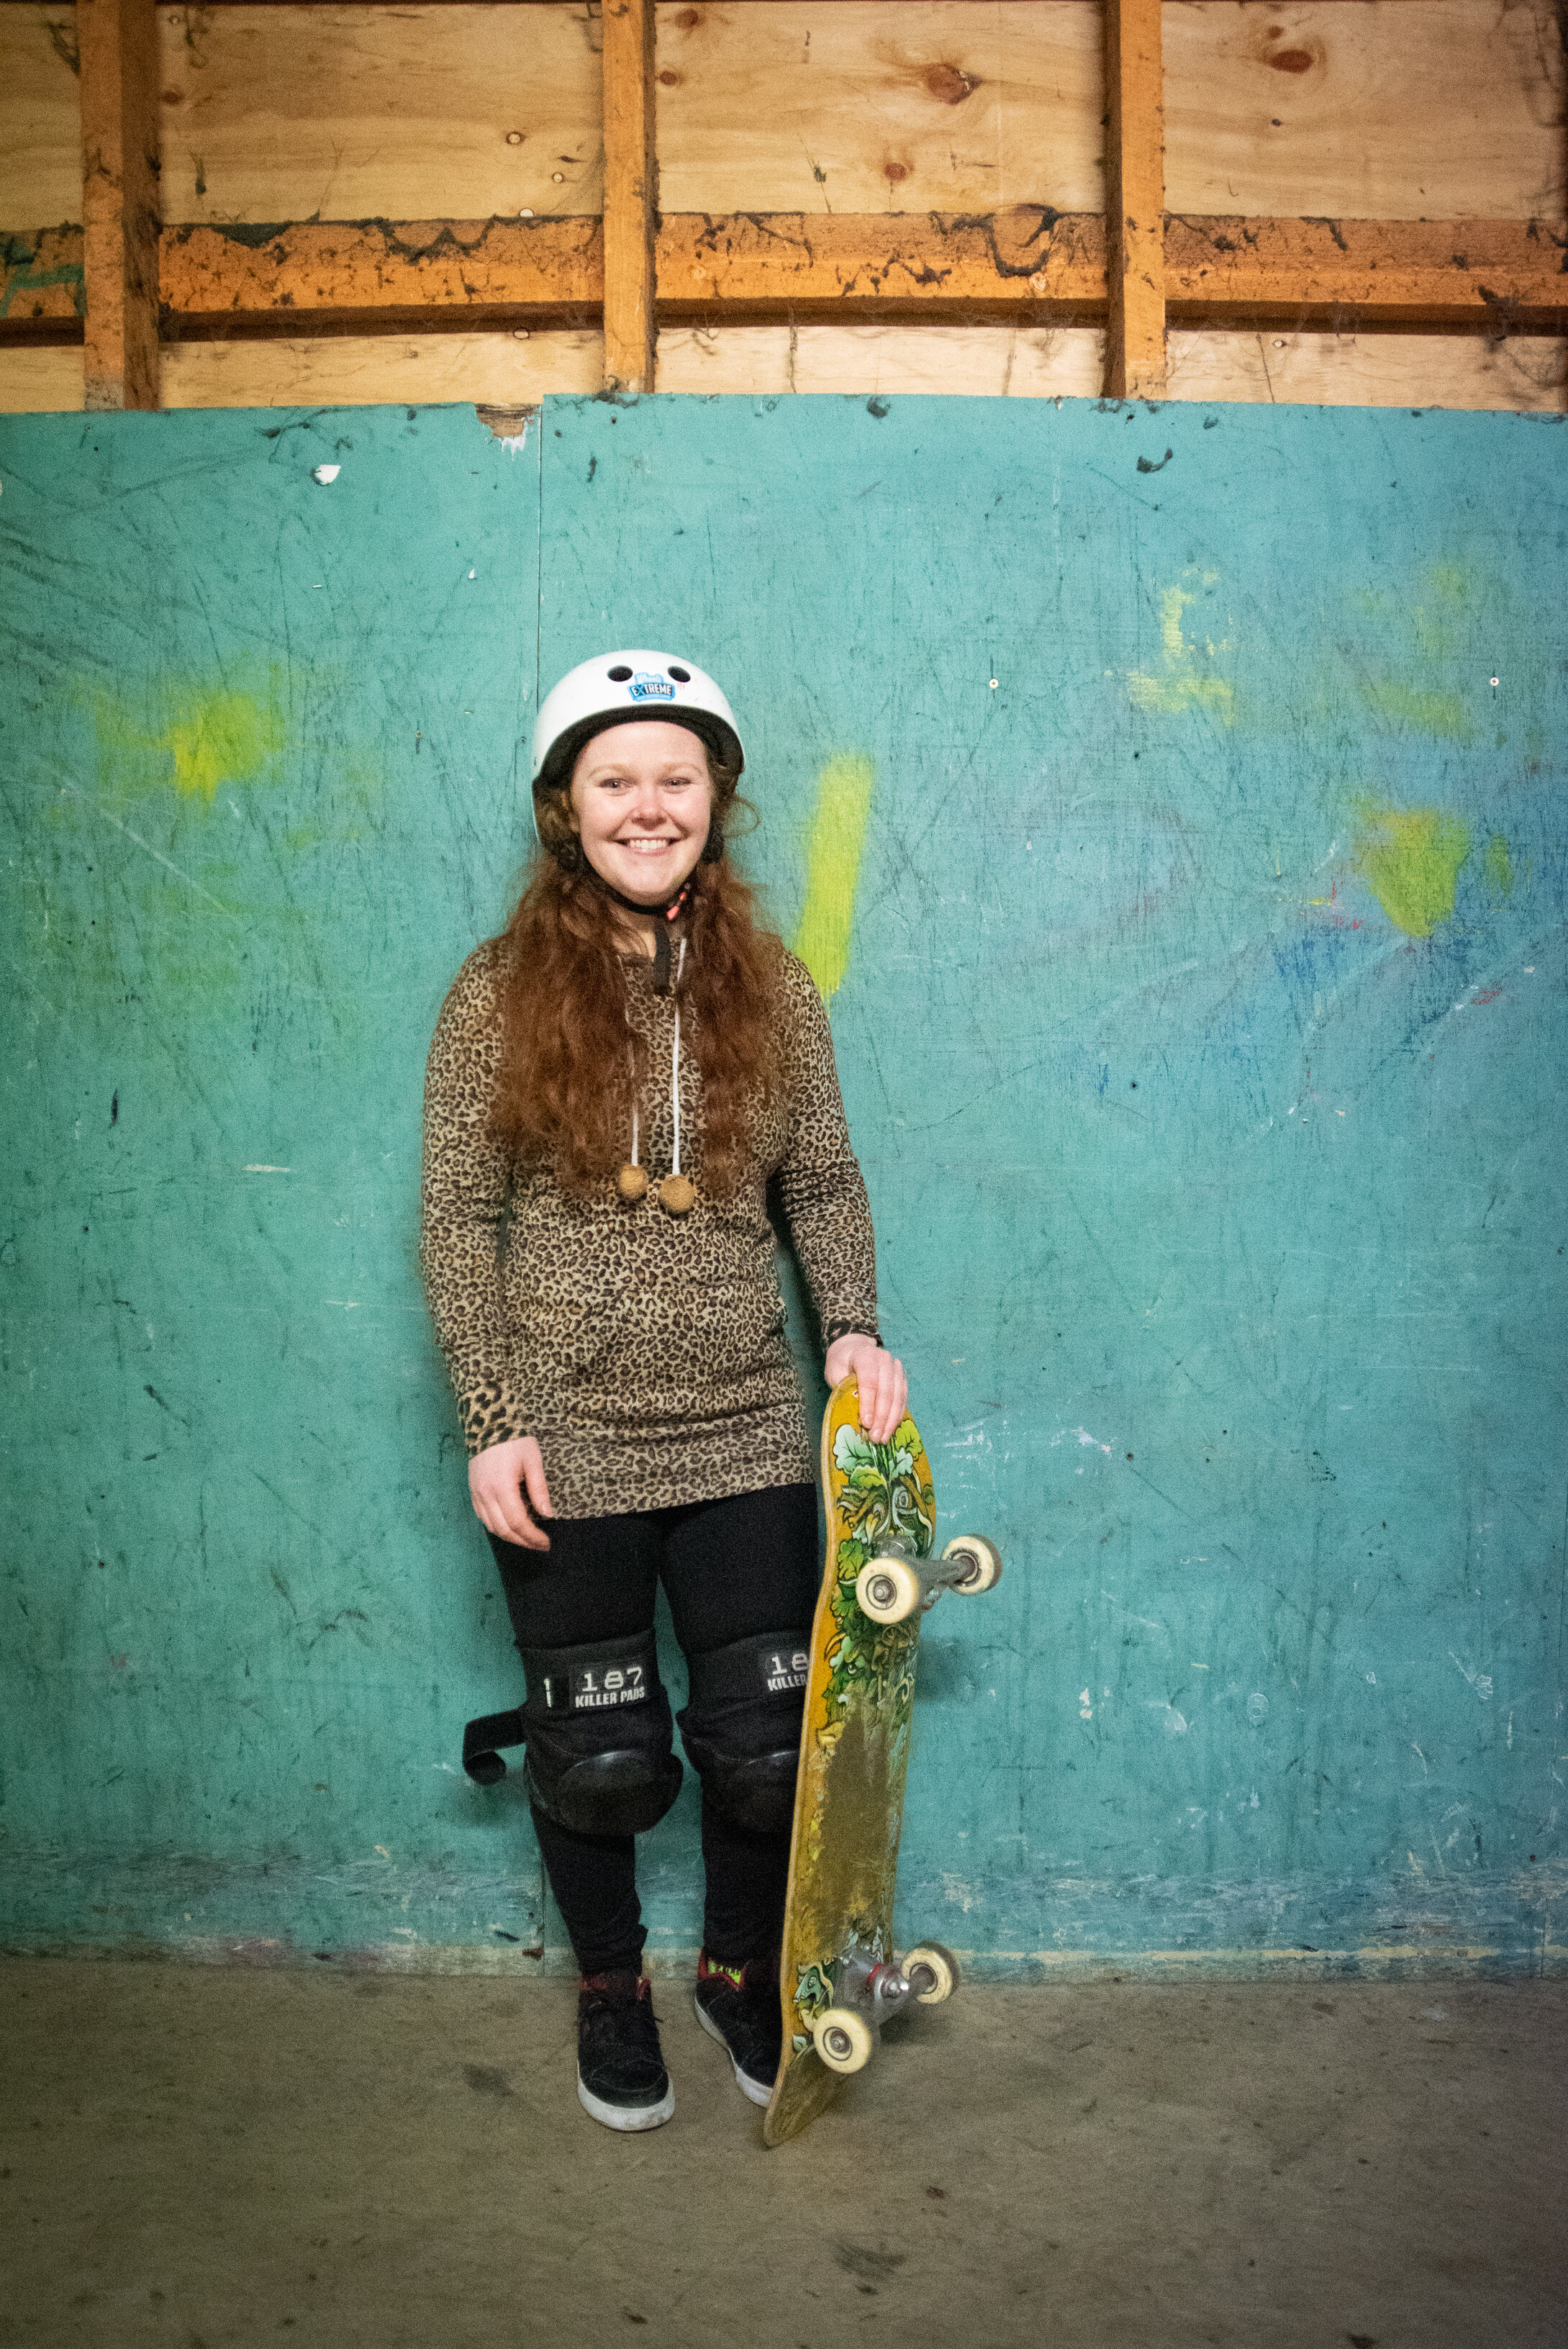 Girls Skate Sesh Ramp City Jan 2020 - Images Claire Griffiths (34).jpg